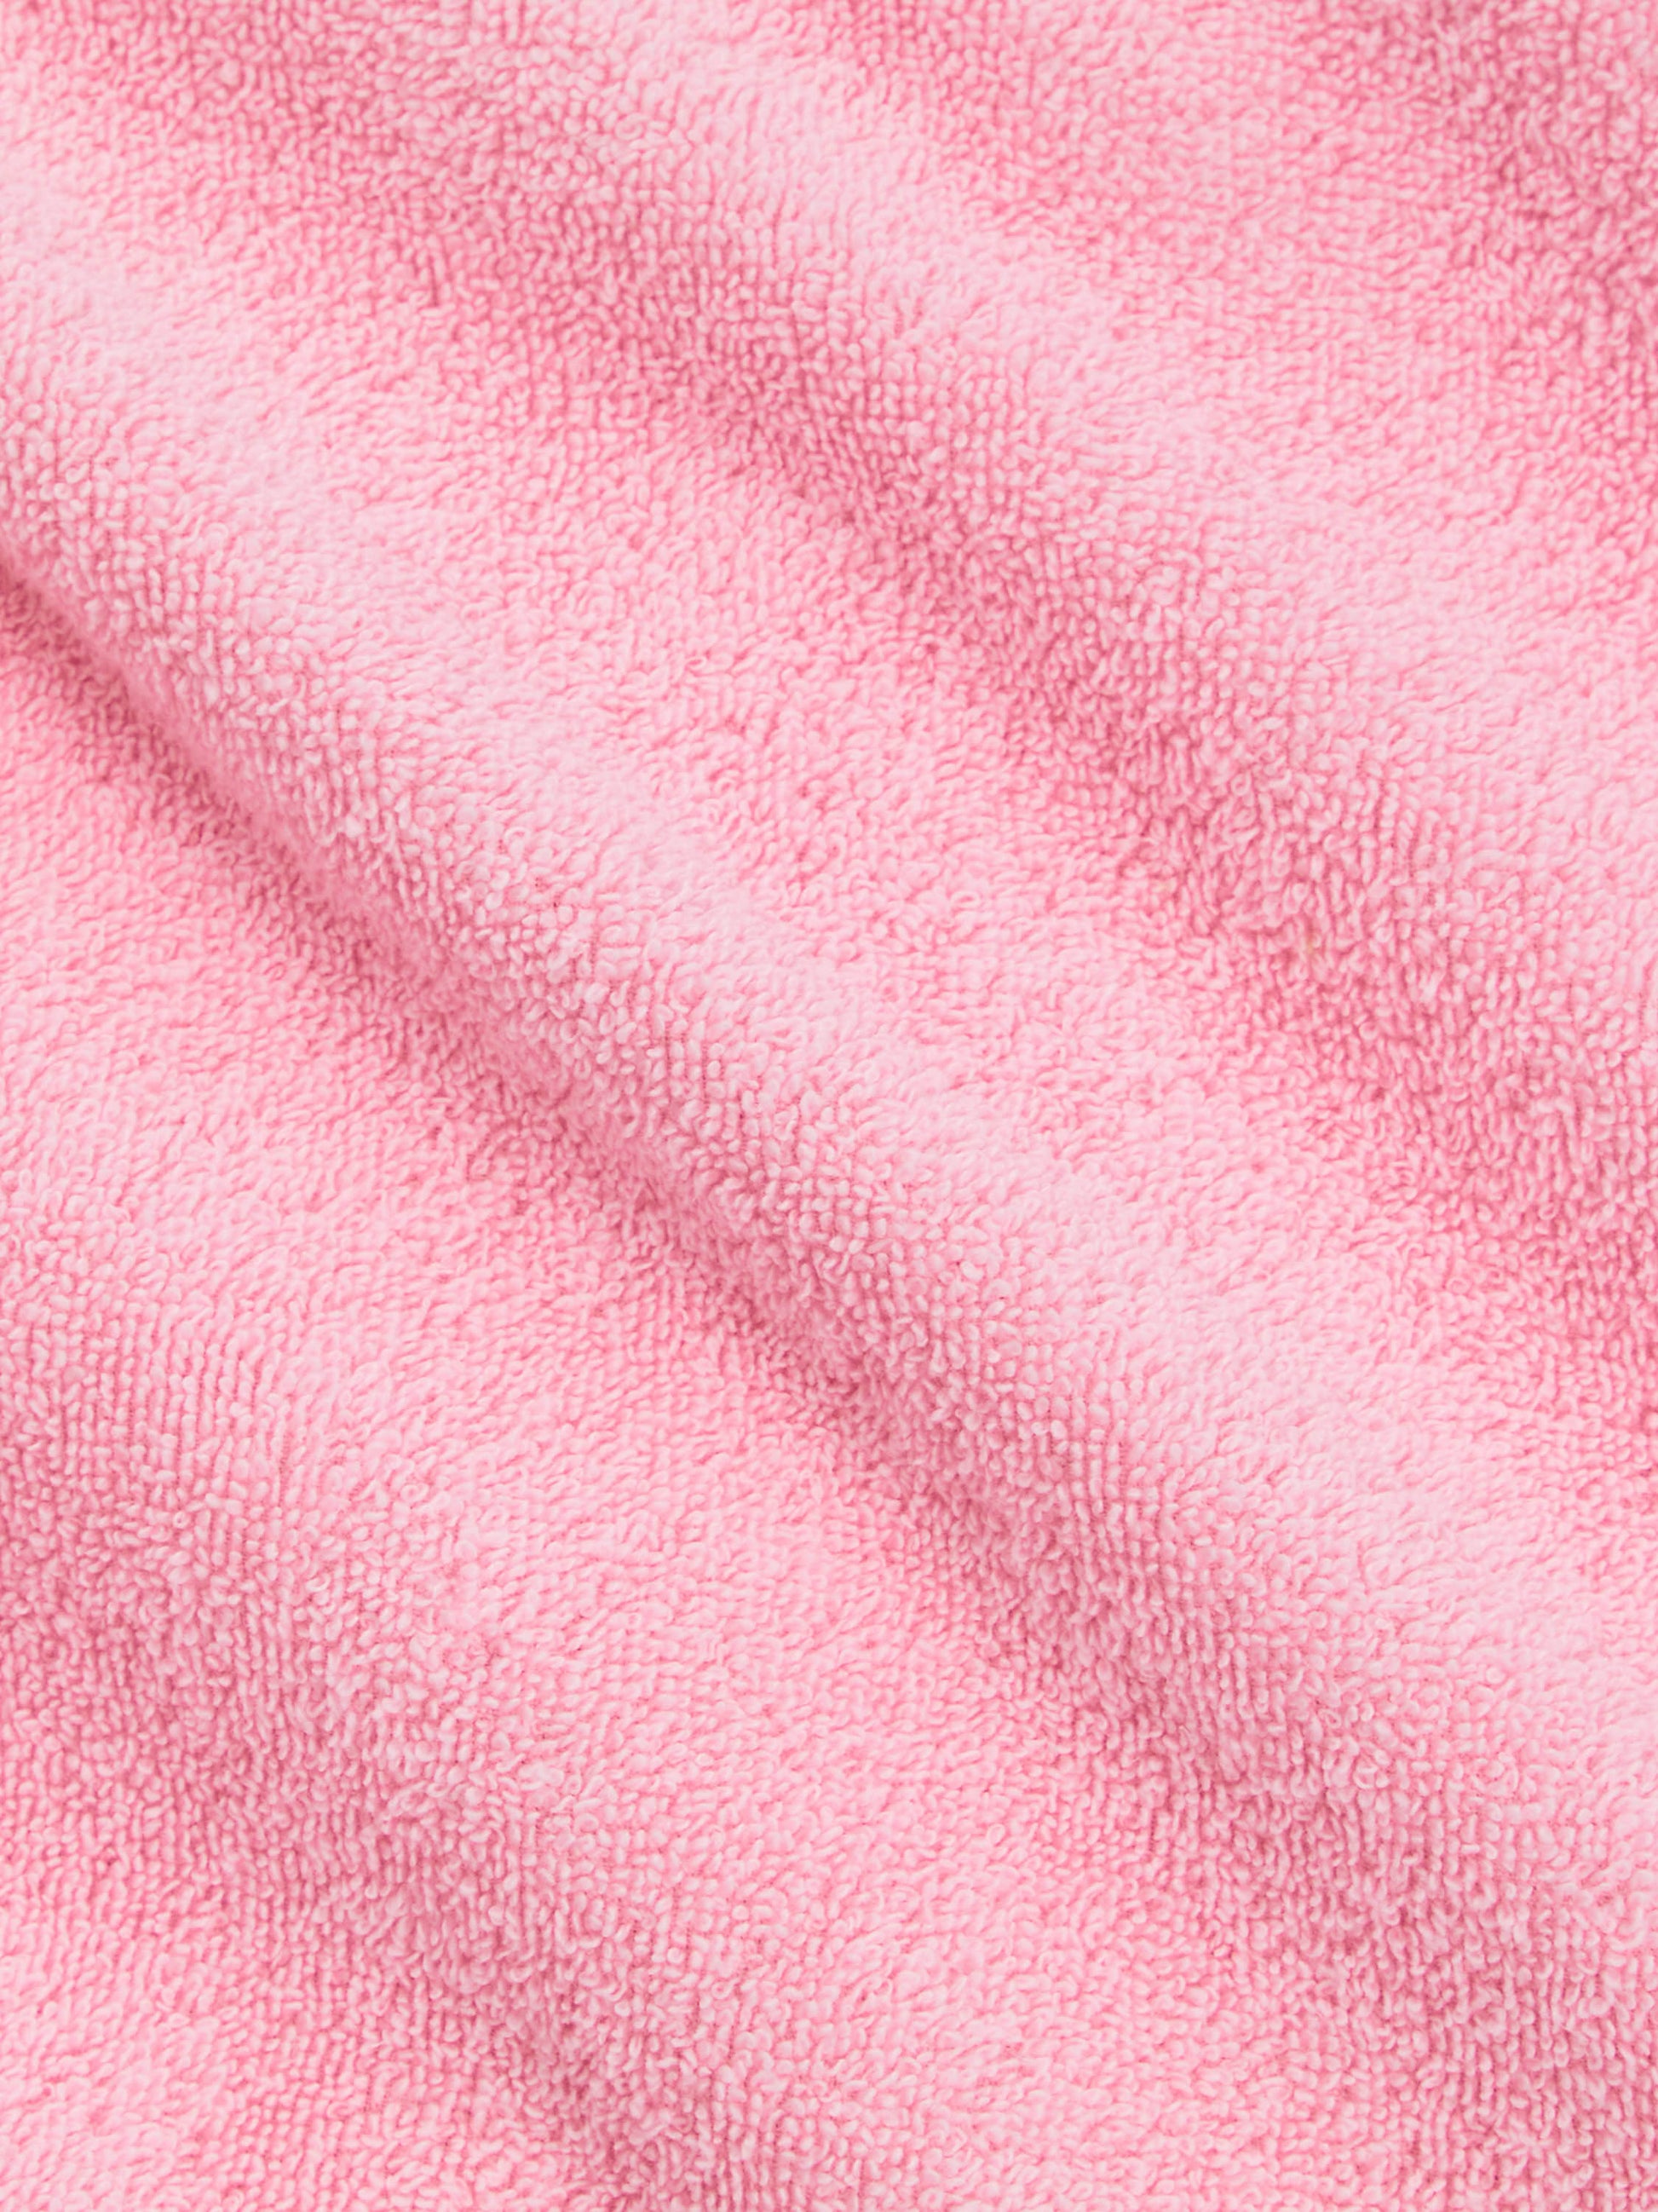 Robert-Rabensteiner-Towelling-Poncho-Porto-Pink-material